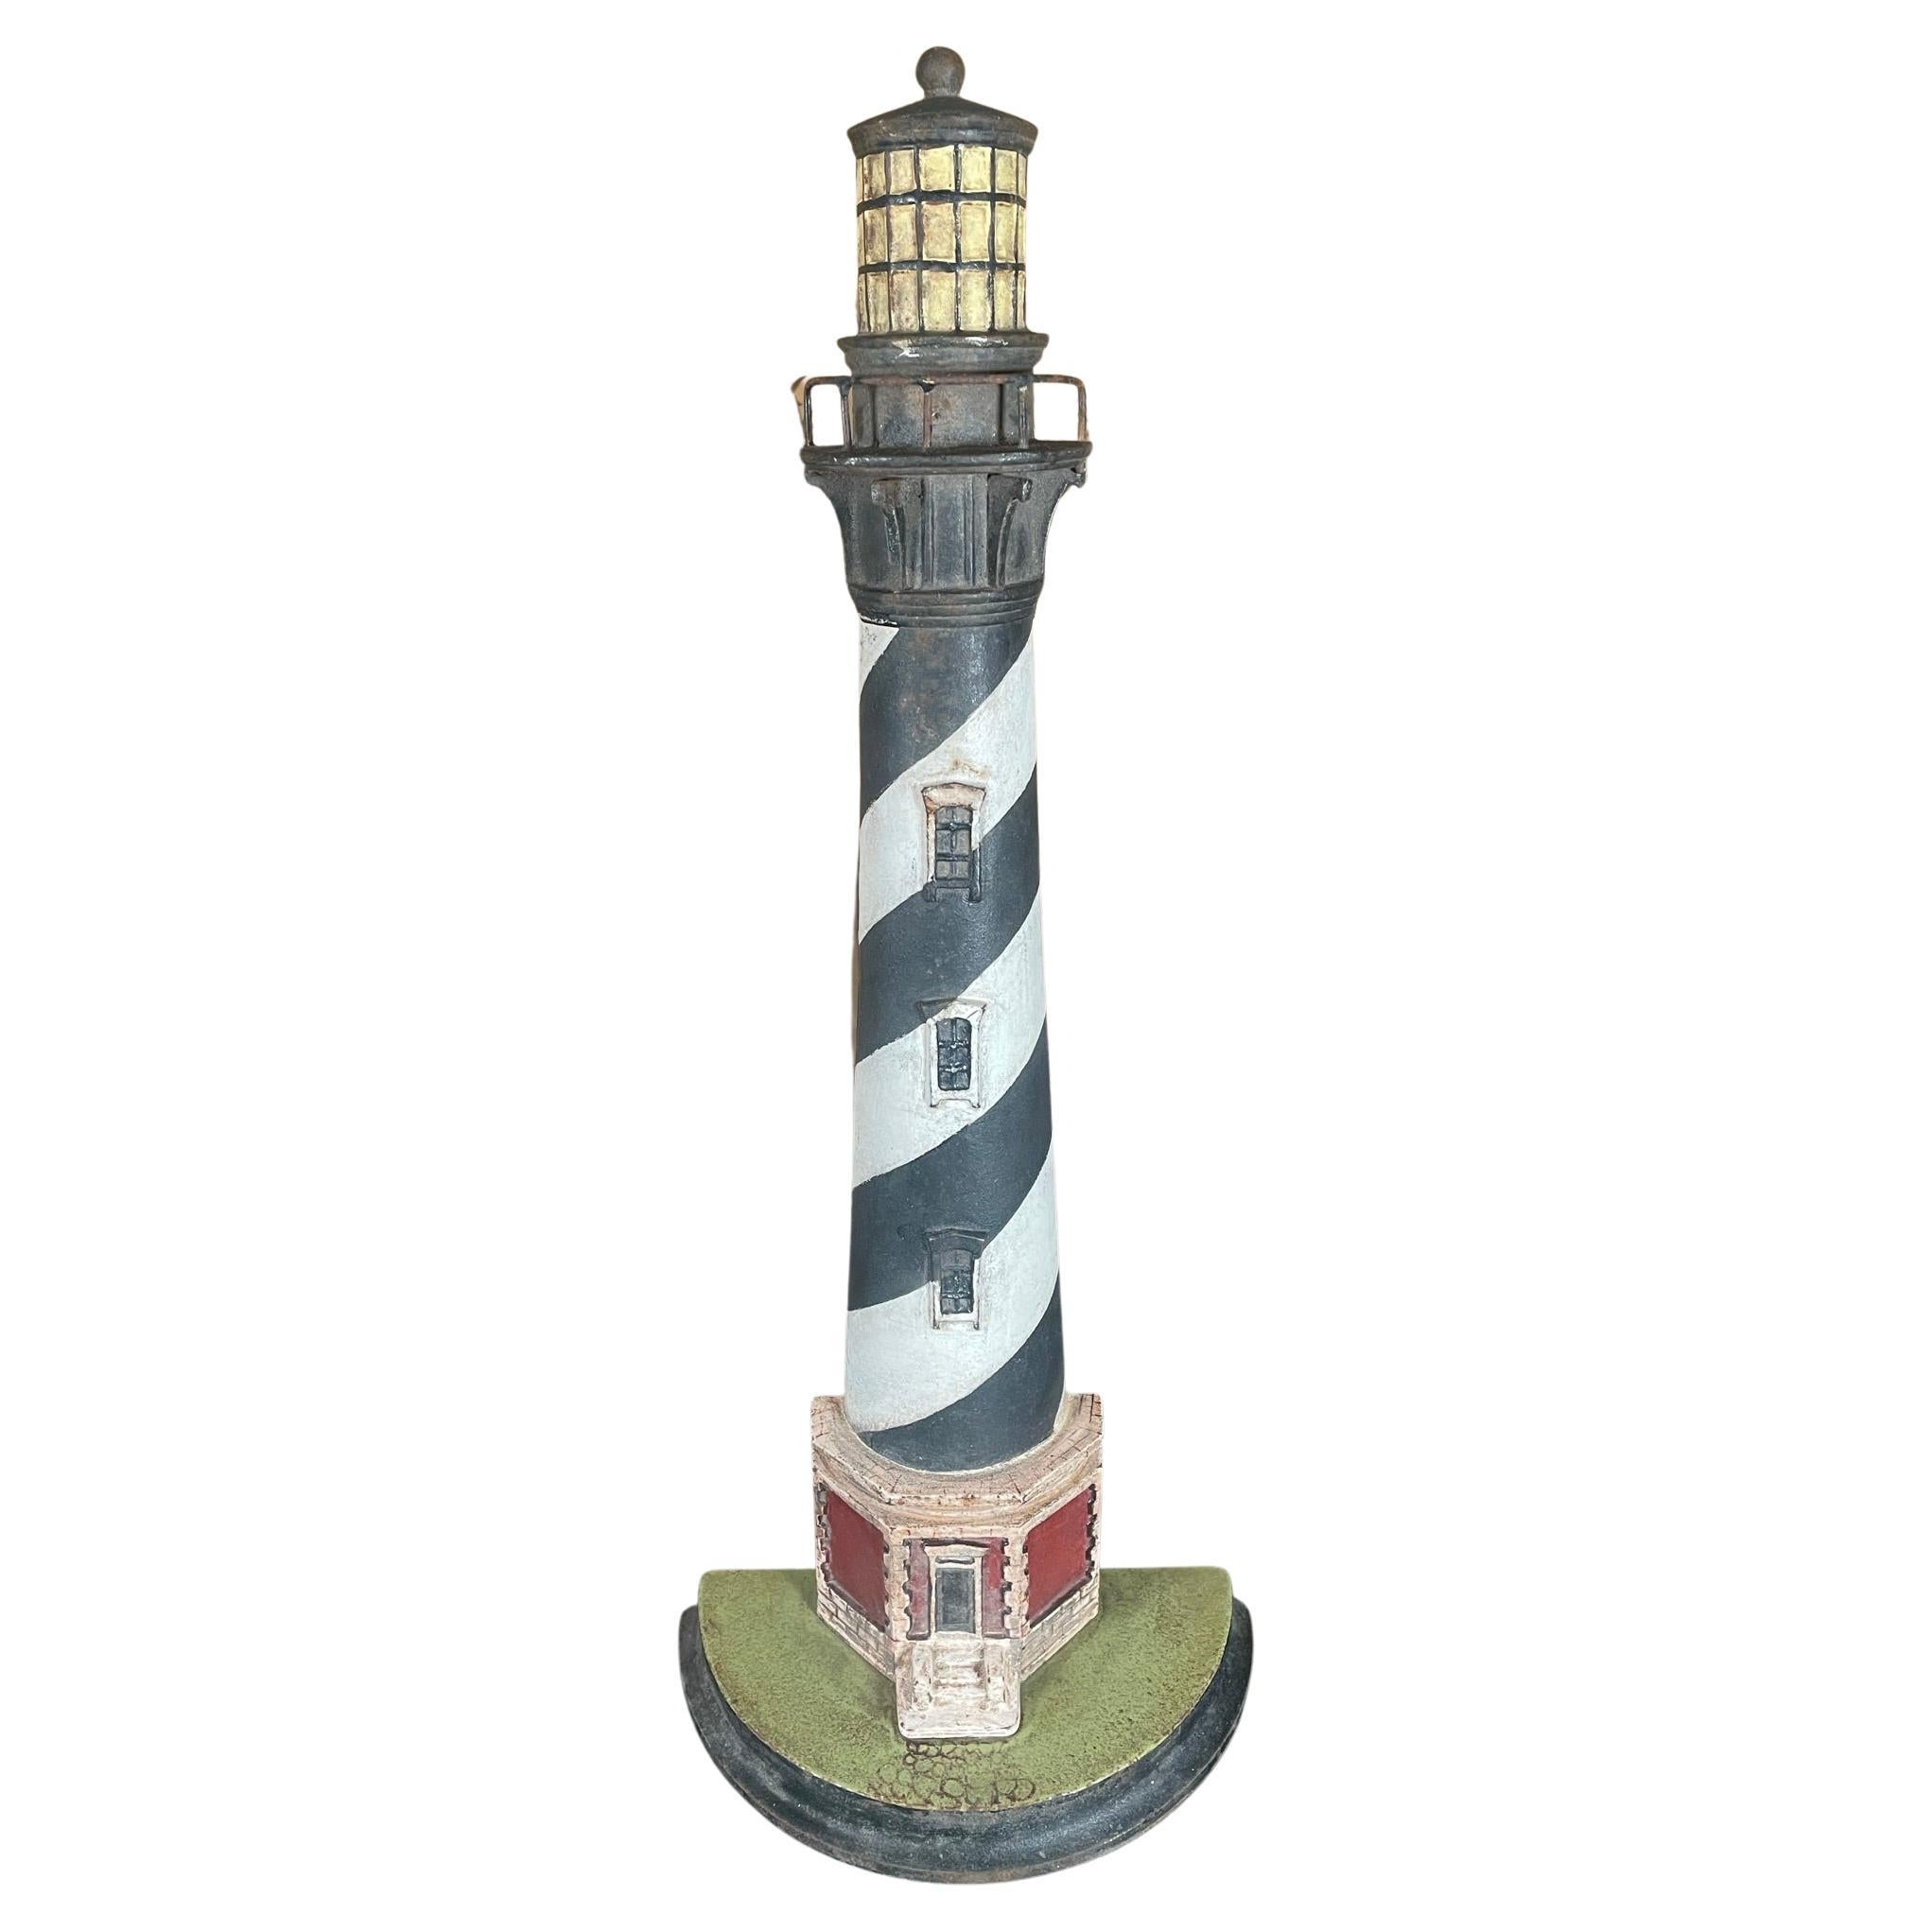 Rare Old "Cape Hattaras" Lighthouse Sculpture in Vibrant Original Colors